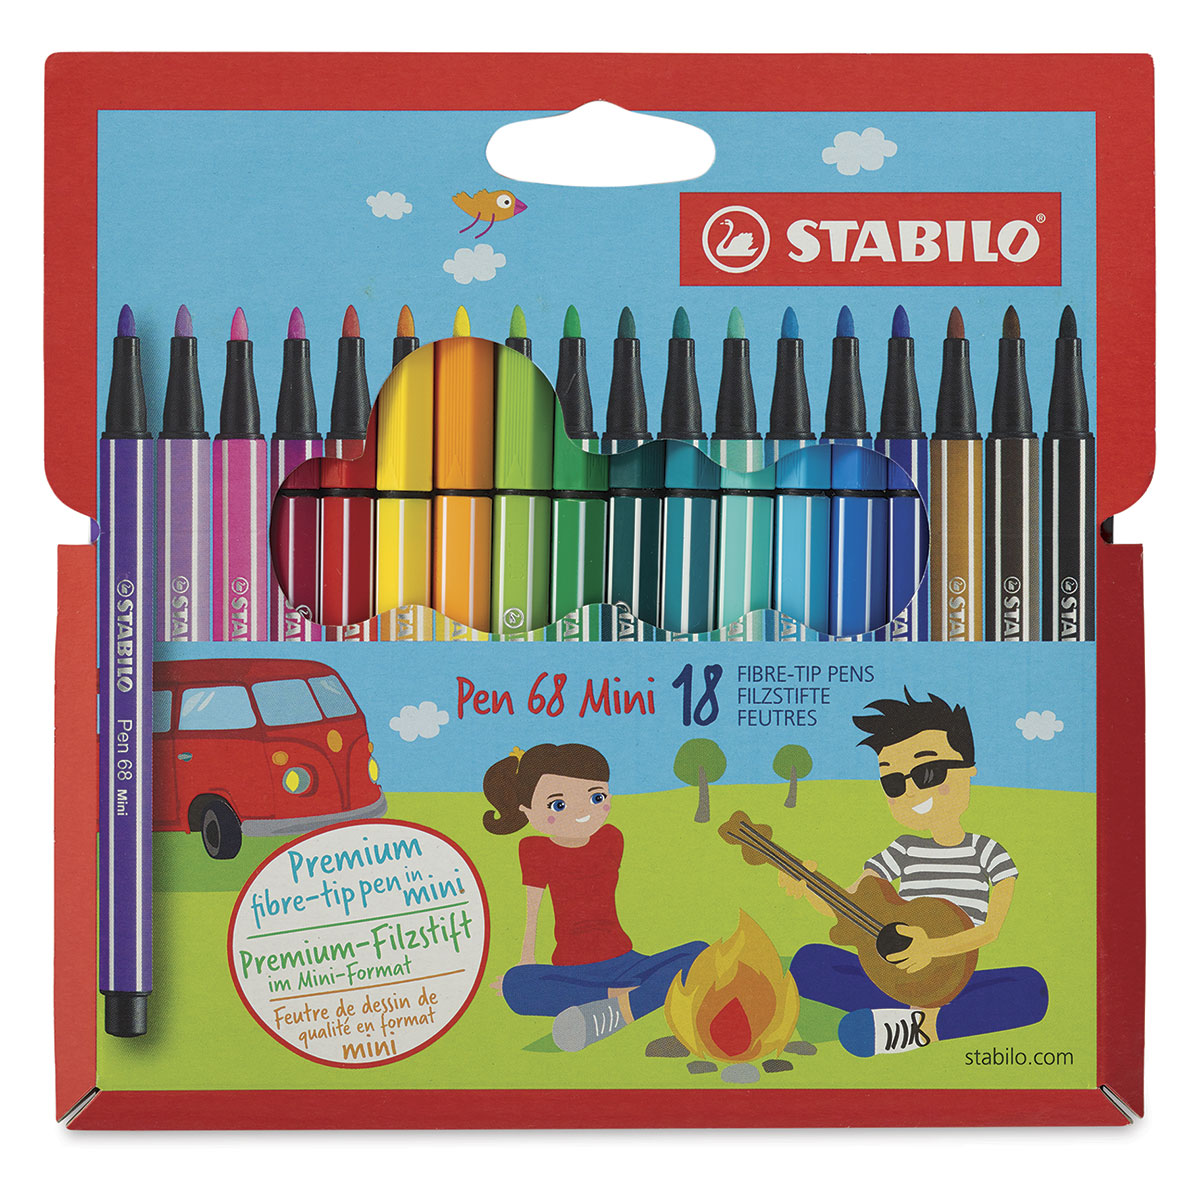 STABILO Premium Felt Tip Pen - Pen 68 - Wallet of 18 - Assorted Soft Colors